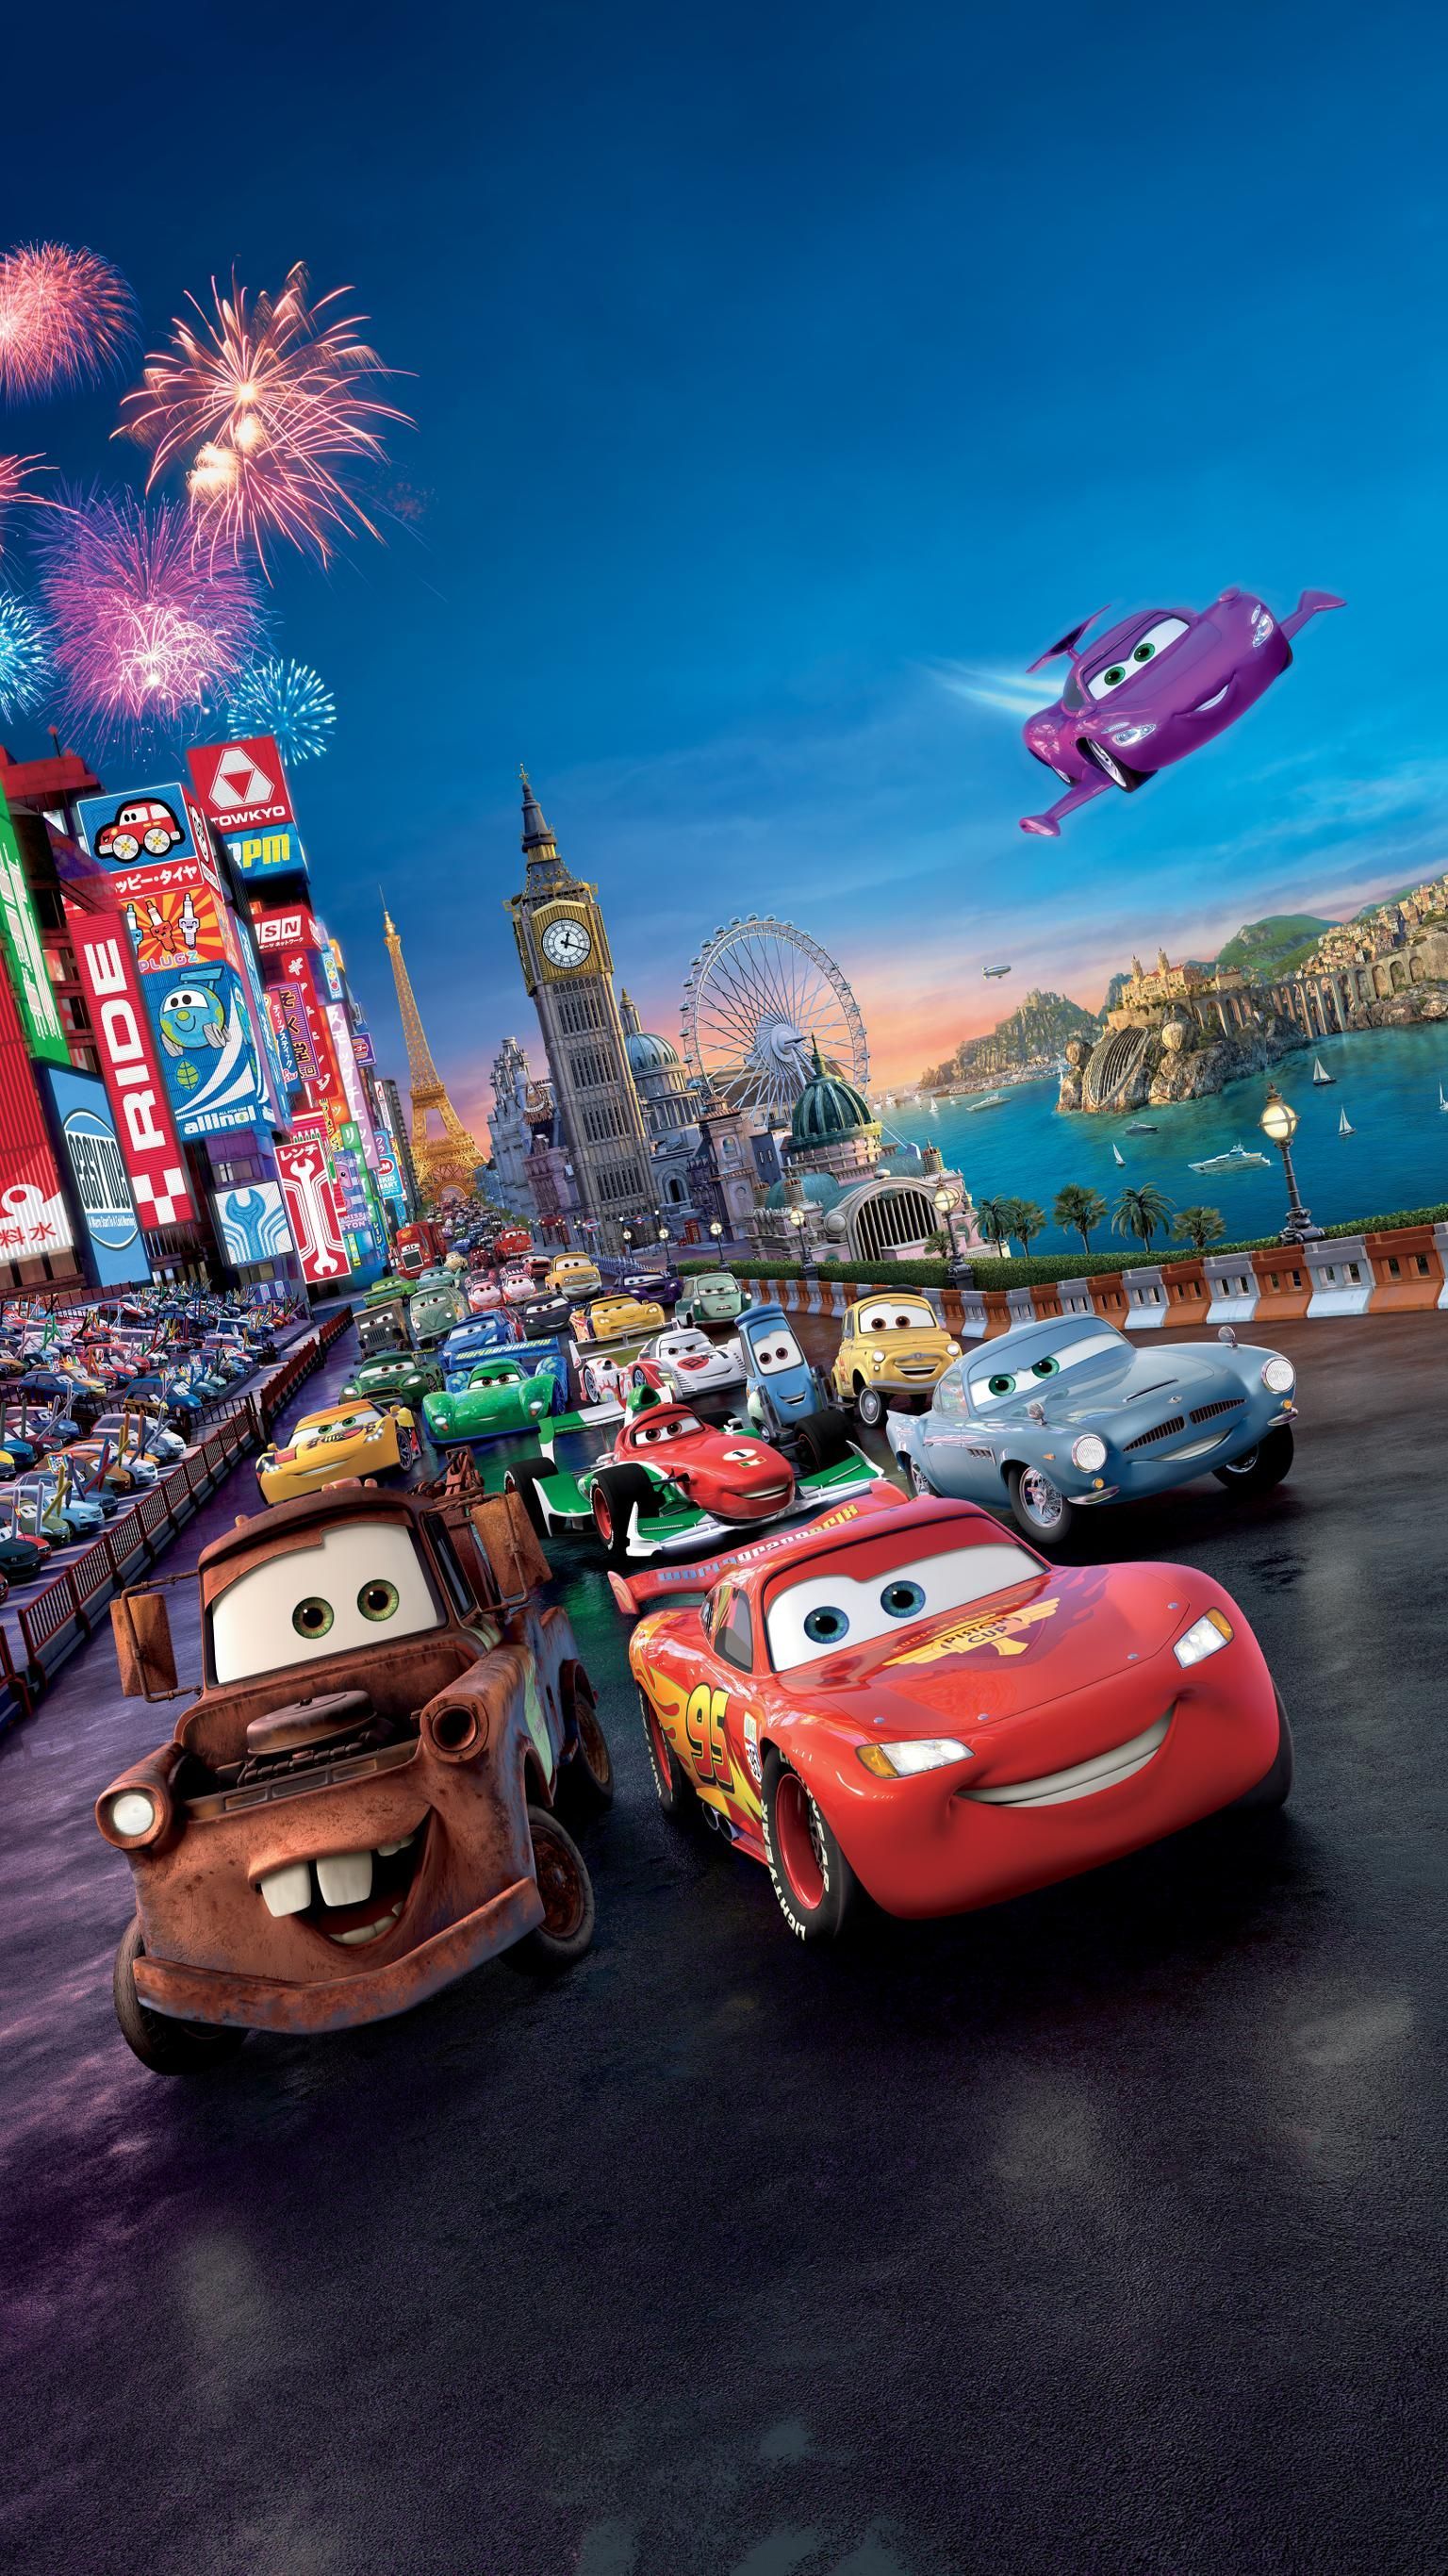 Disney Pixar Cars 2 Wallpaper Free Disney Pixar Cars 2 Background